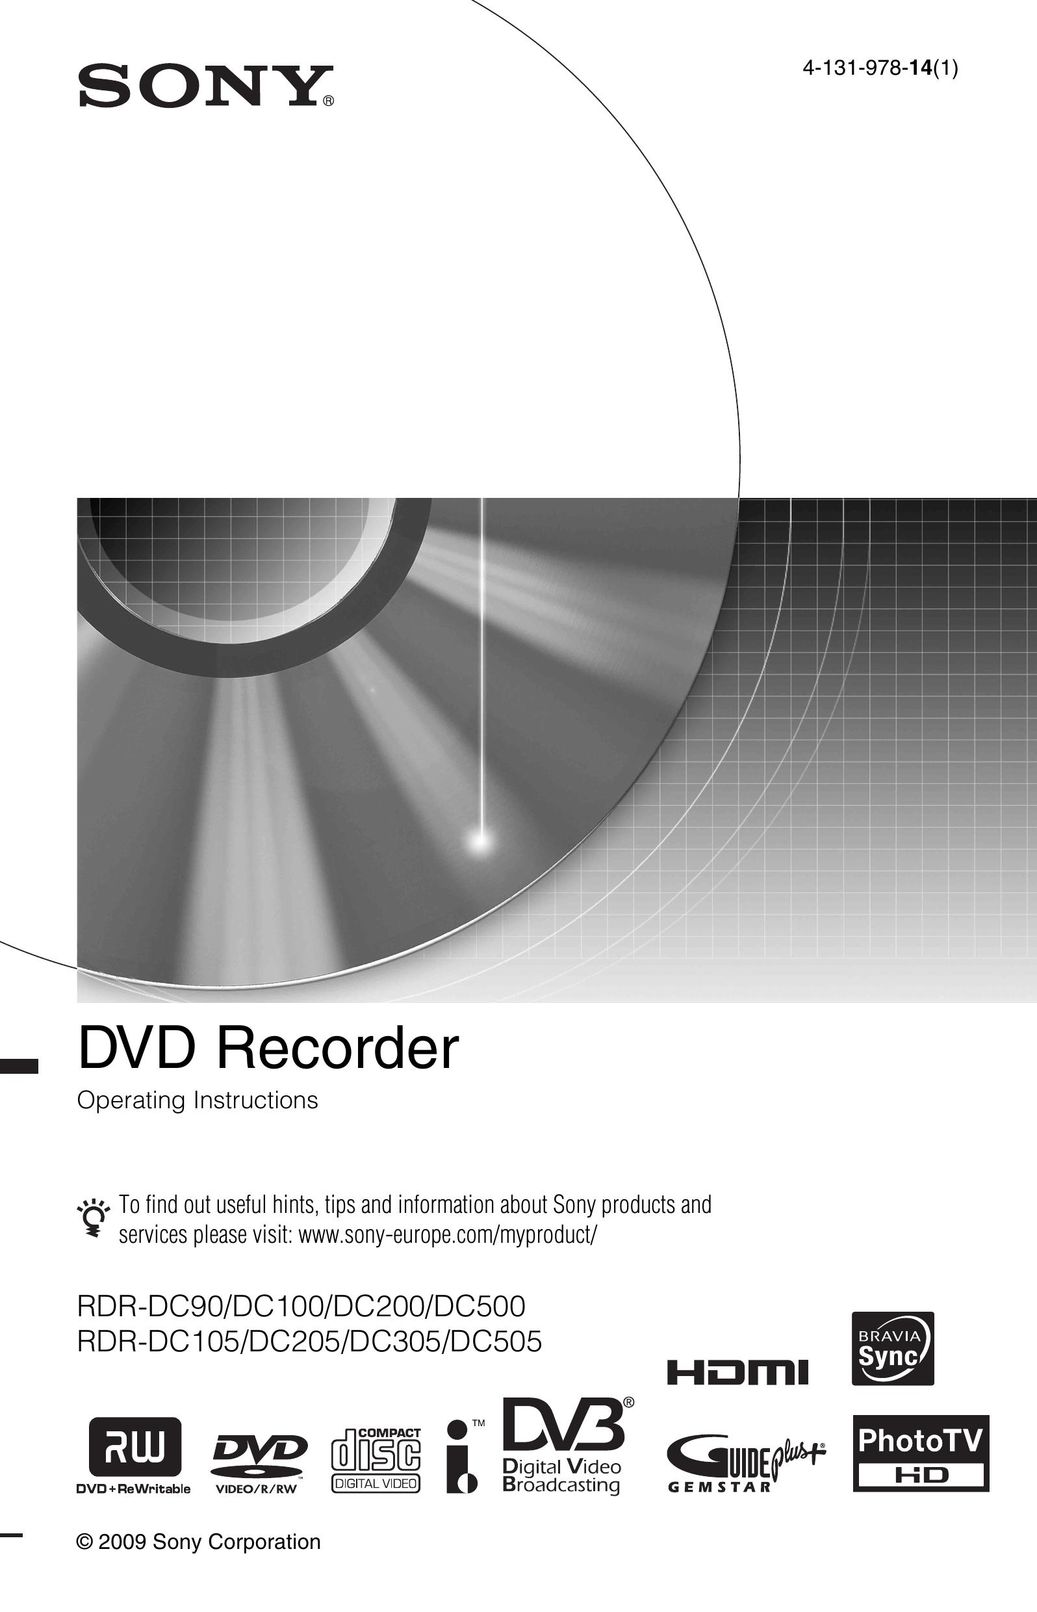 Sony 4-131-978-14(1) DVD Recorder User Manual